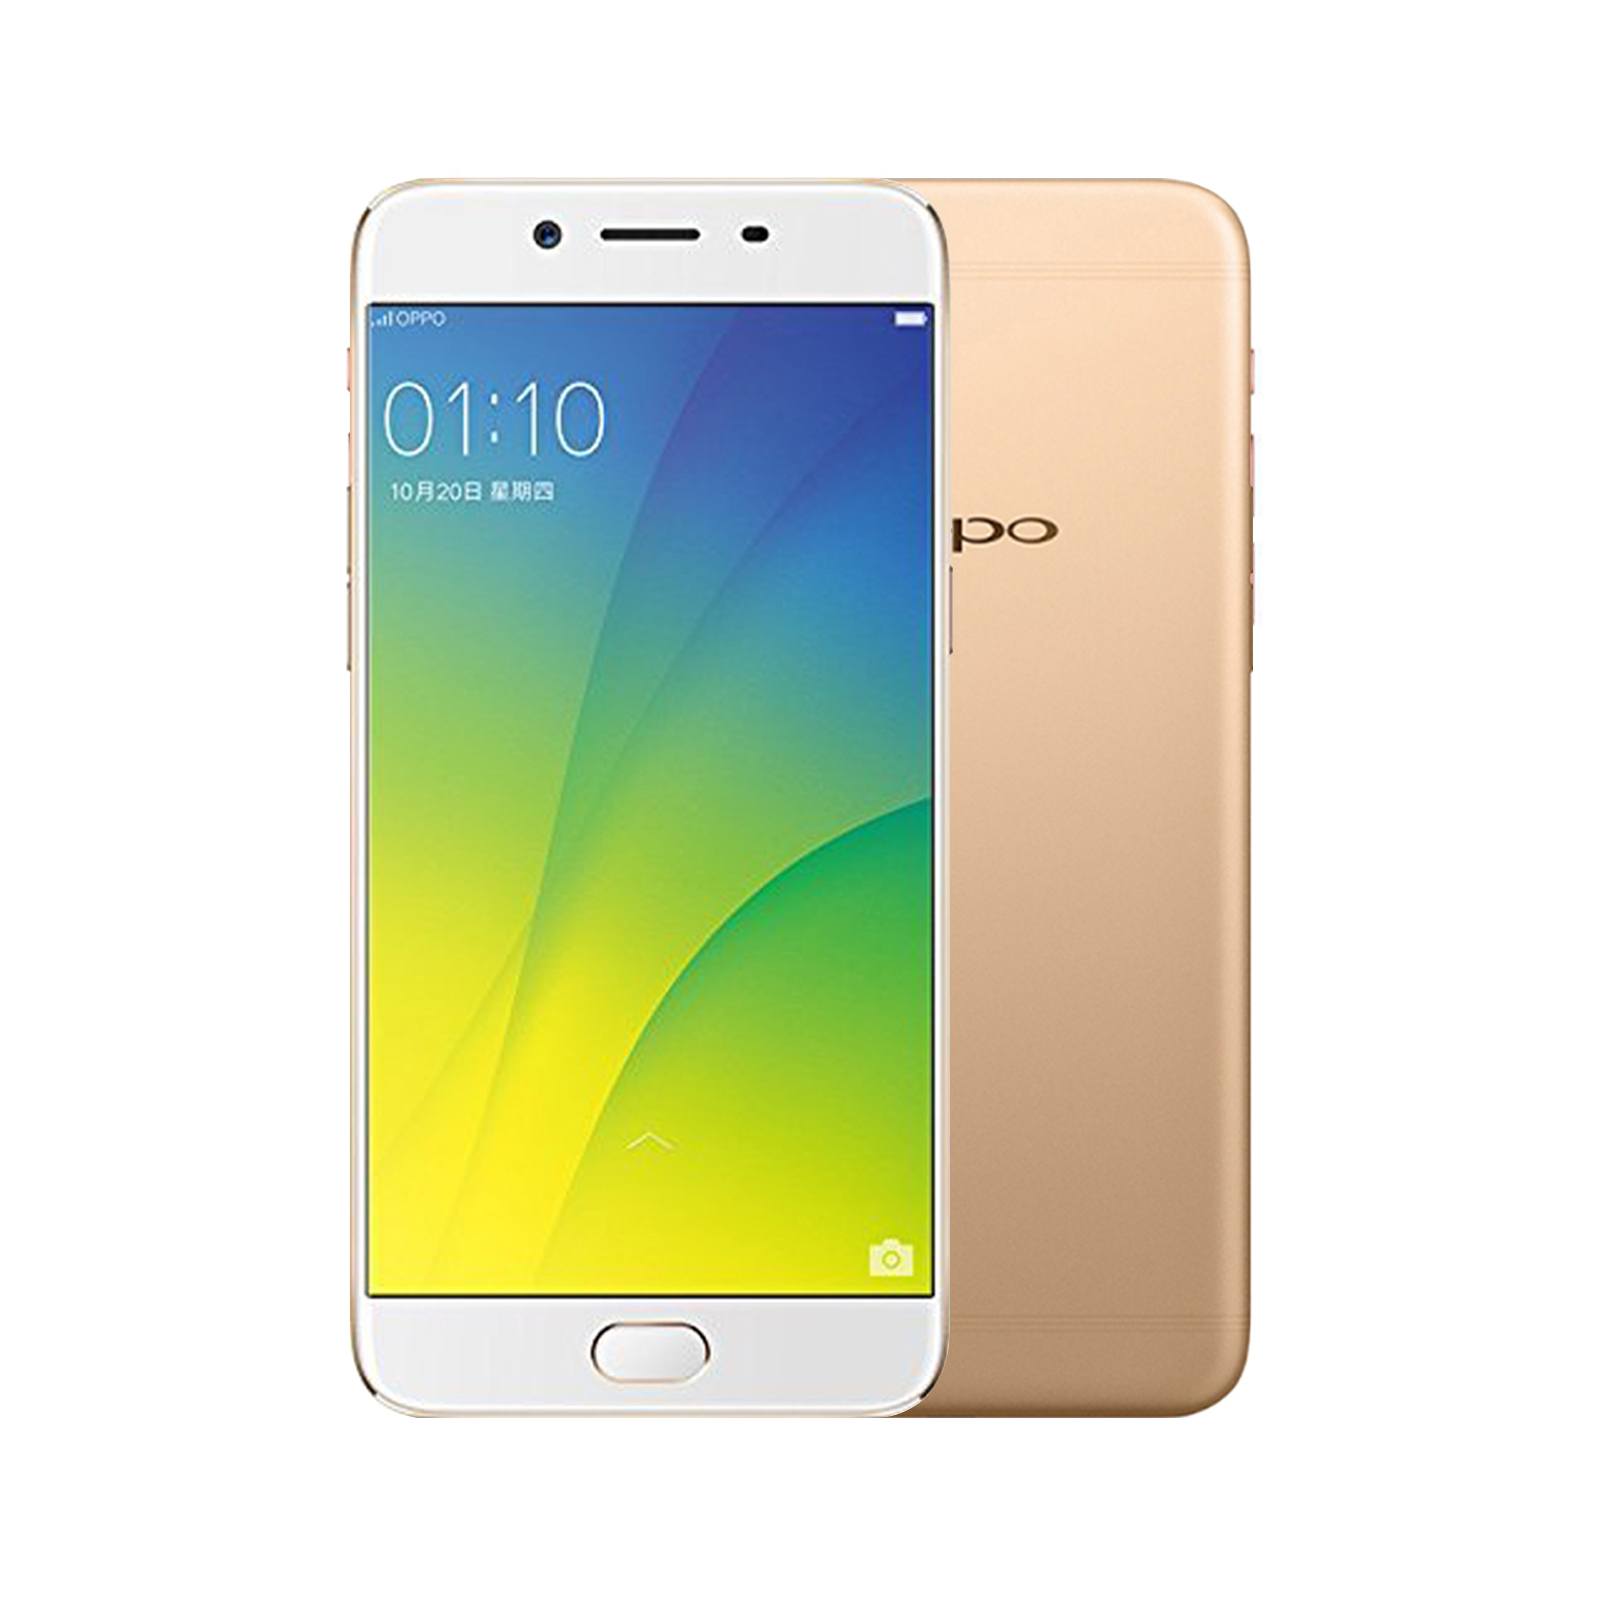 『OPPO新品R9s Plus手机预定』新款OPPO R9s Plus预定_OPPO R9s Plus购买_OPPO R9s Plus拍照手机 ...